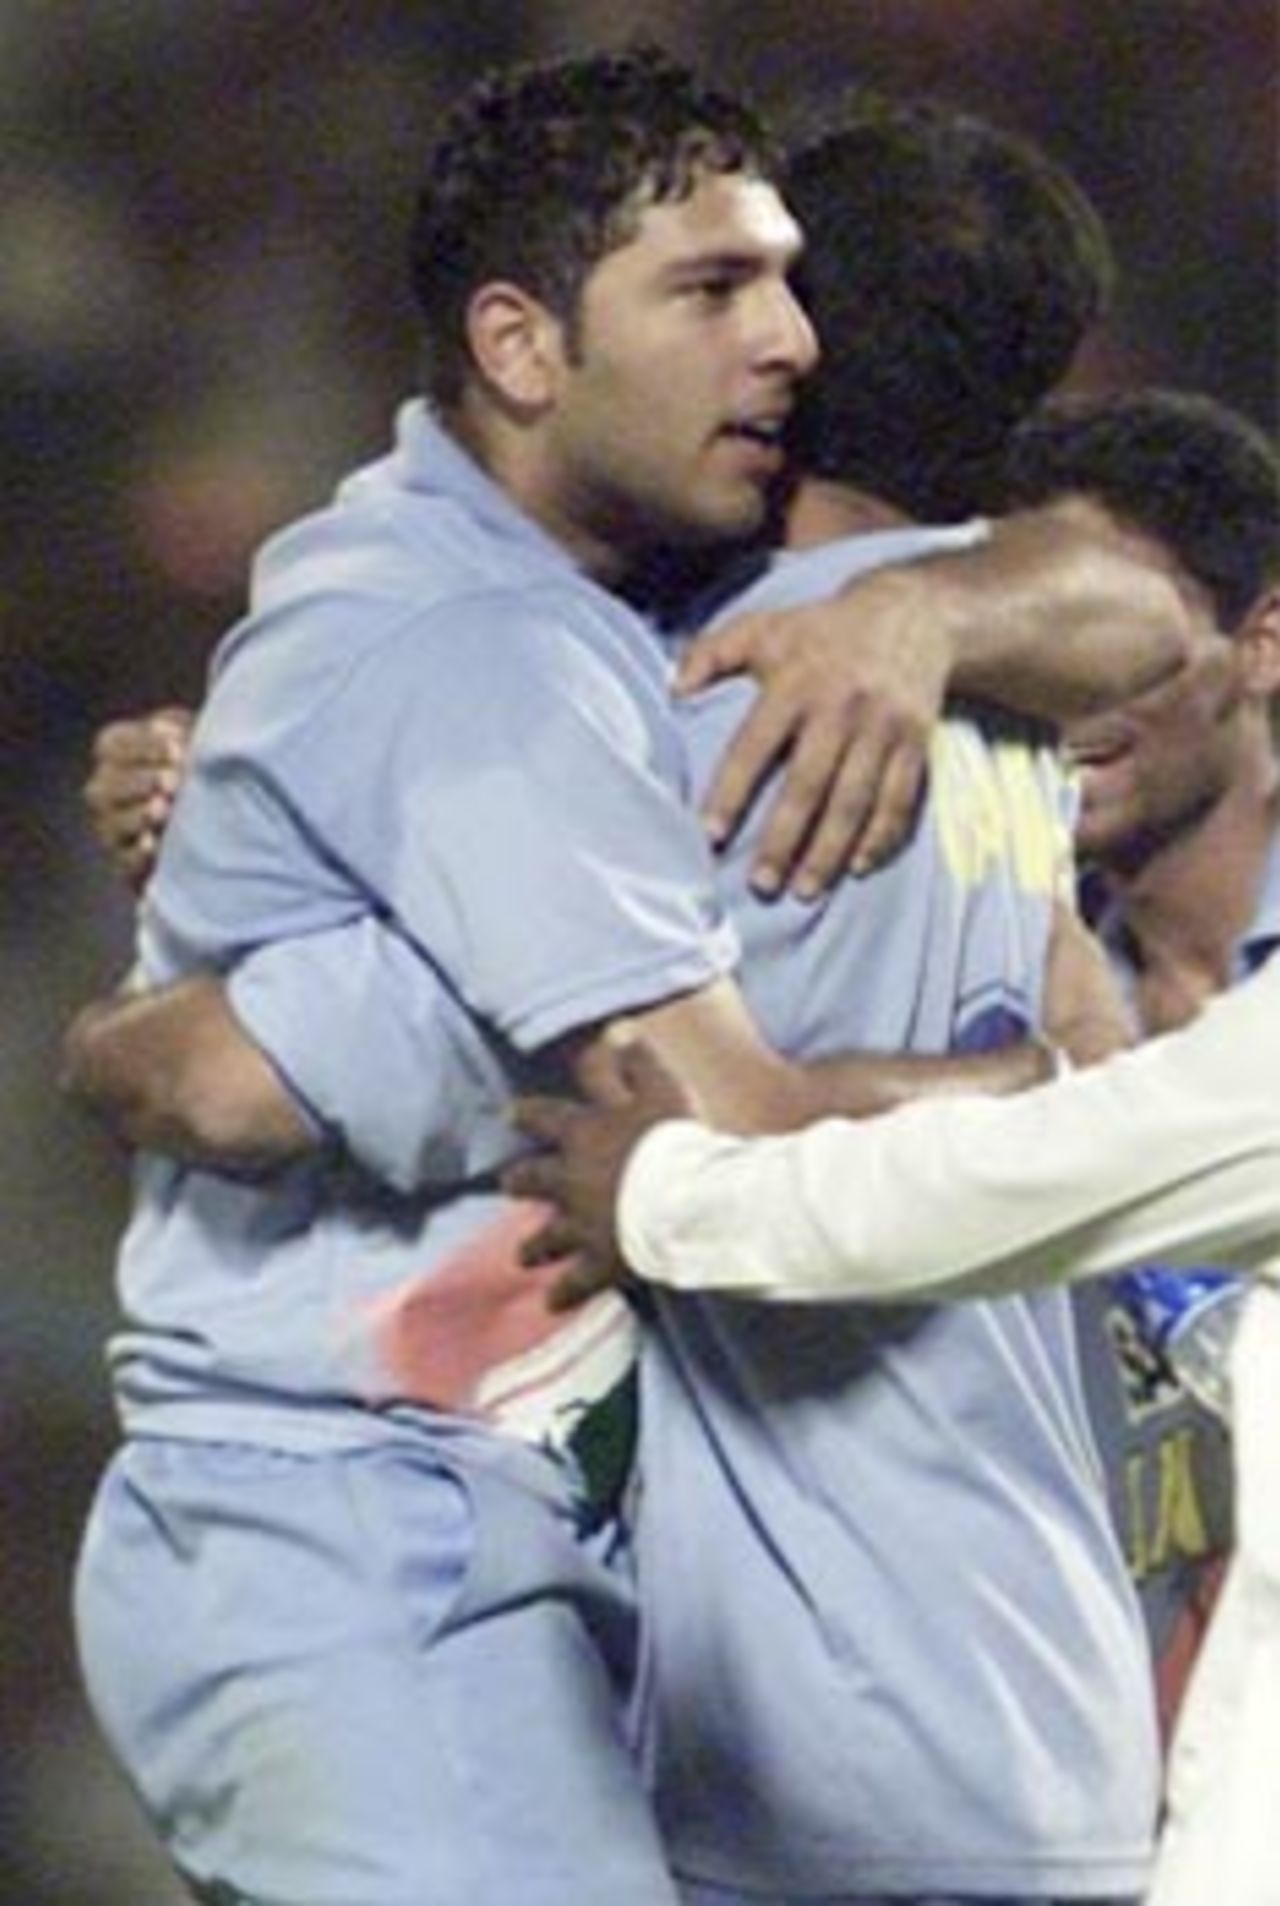 India v Zimbabwe, 4th One Day International, Lal Bahadur Shastri Stadium, Hyderabad, 16 March 2002